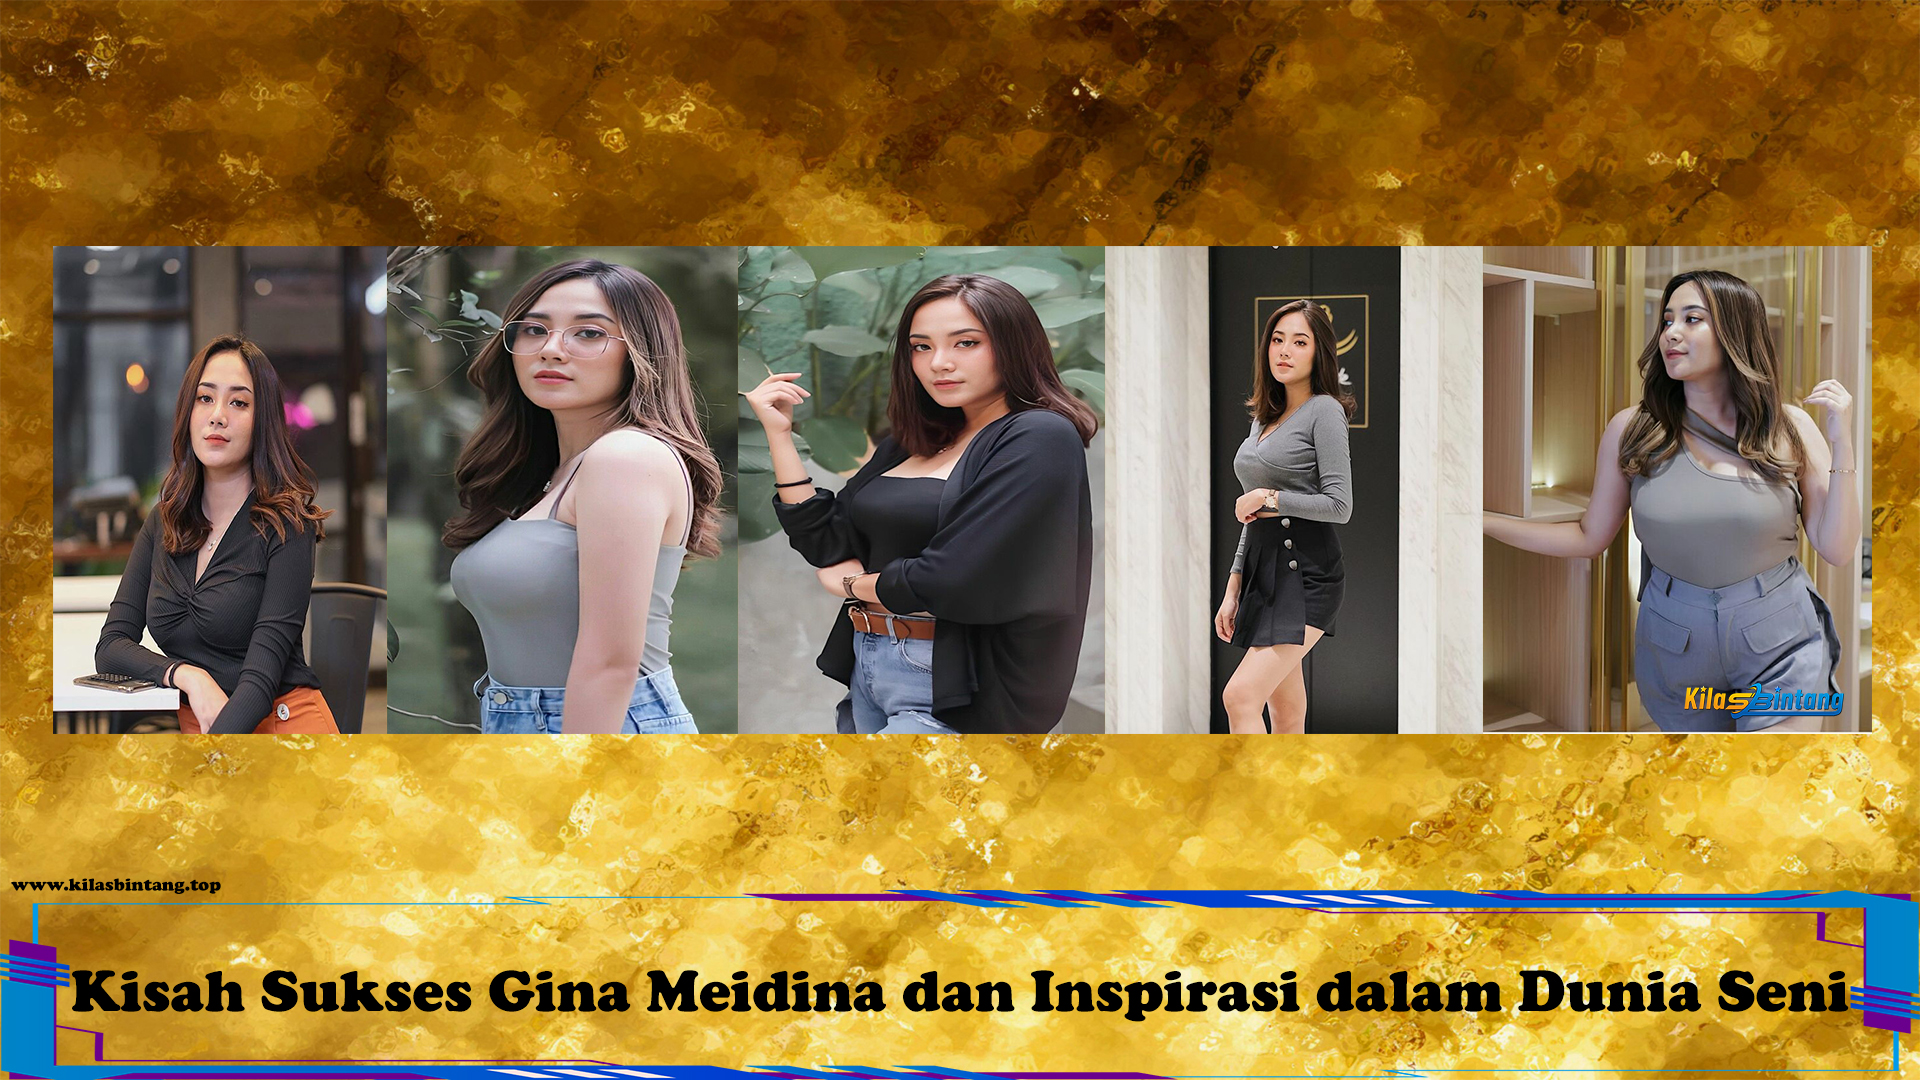 Kisah Sukses Gina Meidina dan Inspirasi dalam Dunia Seni